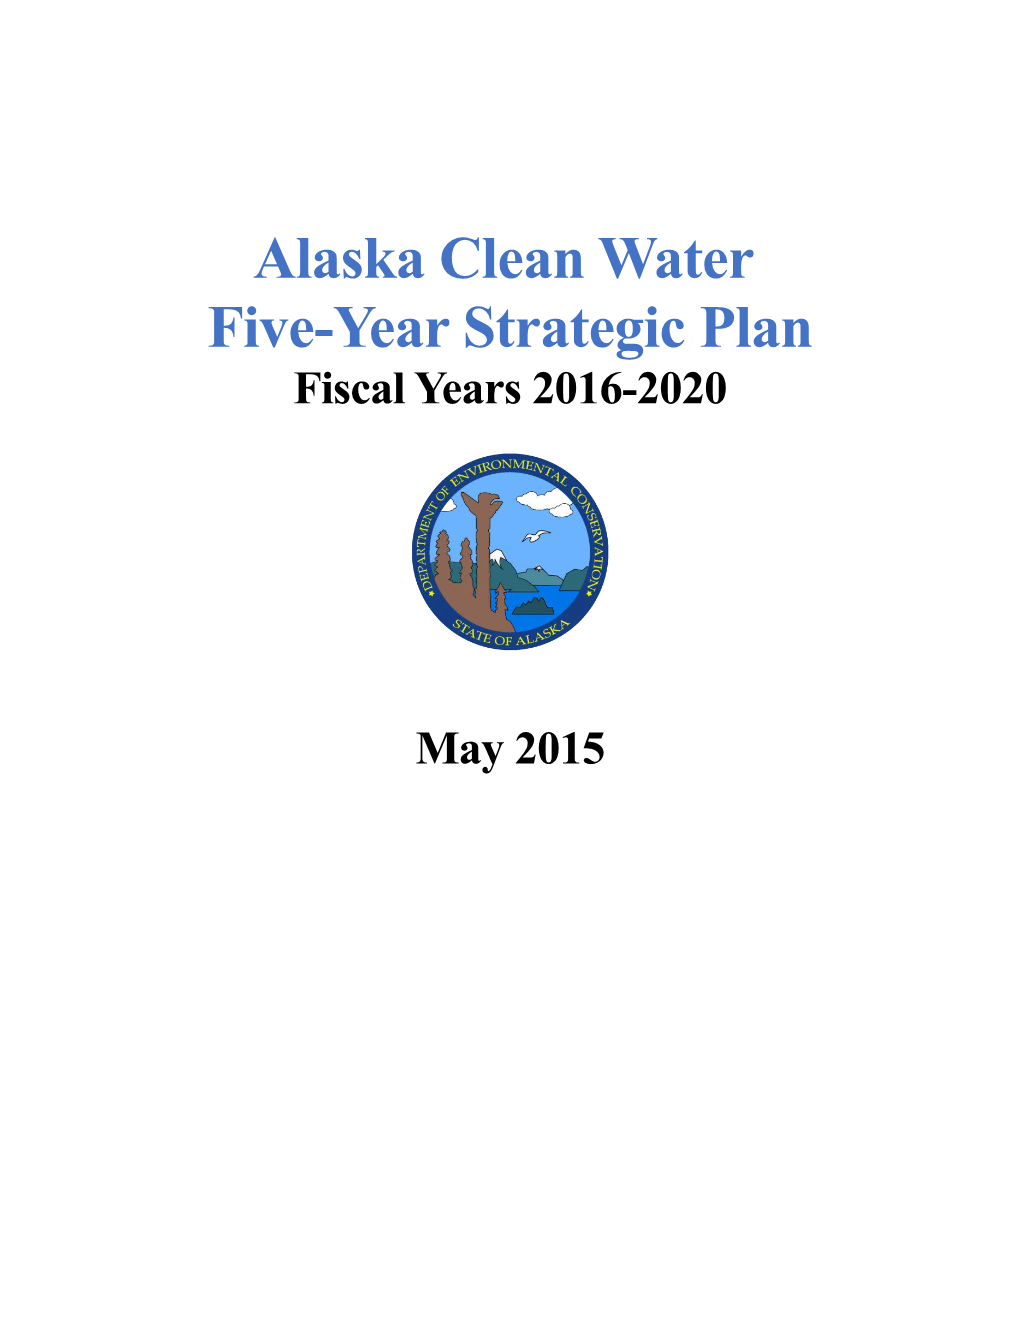 Alaska Clean Water Five-Year Strategic Plan